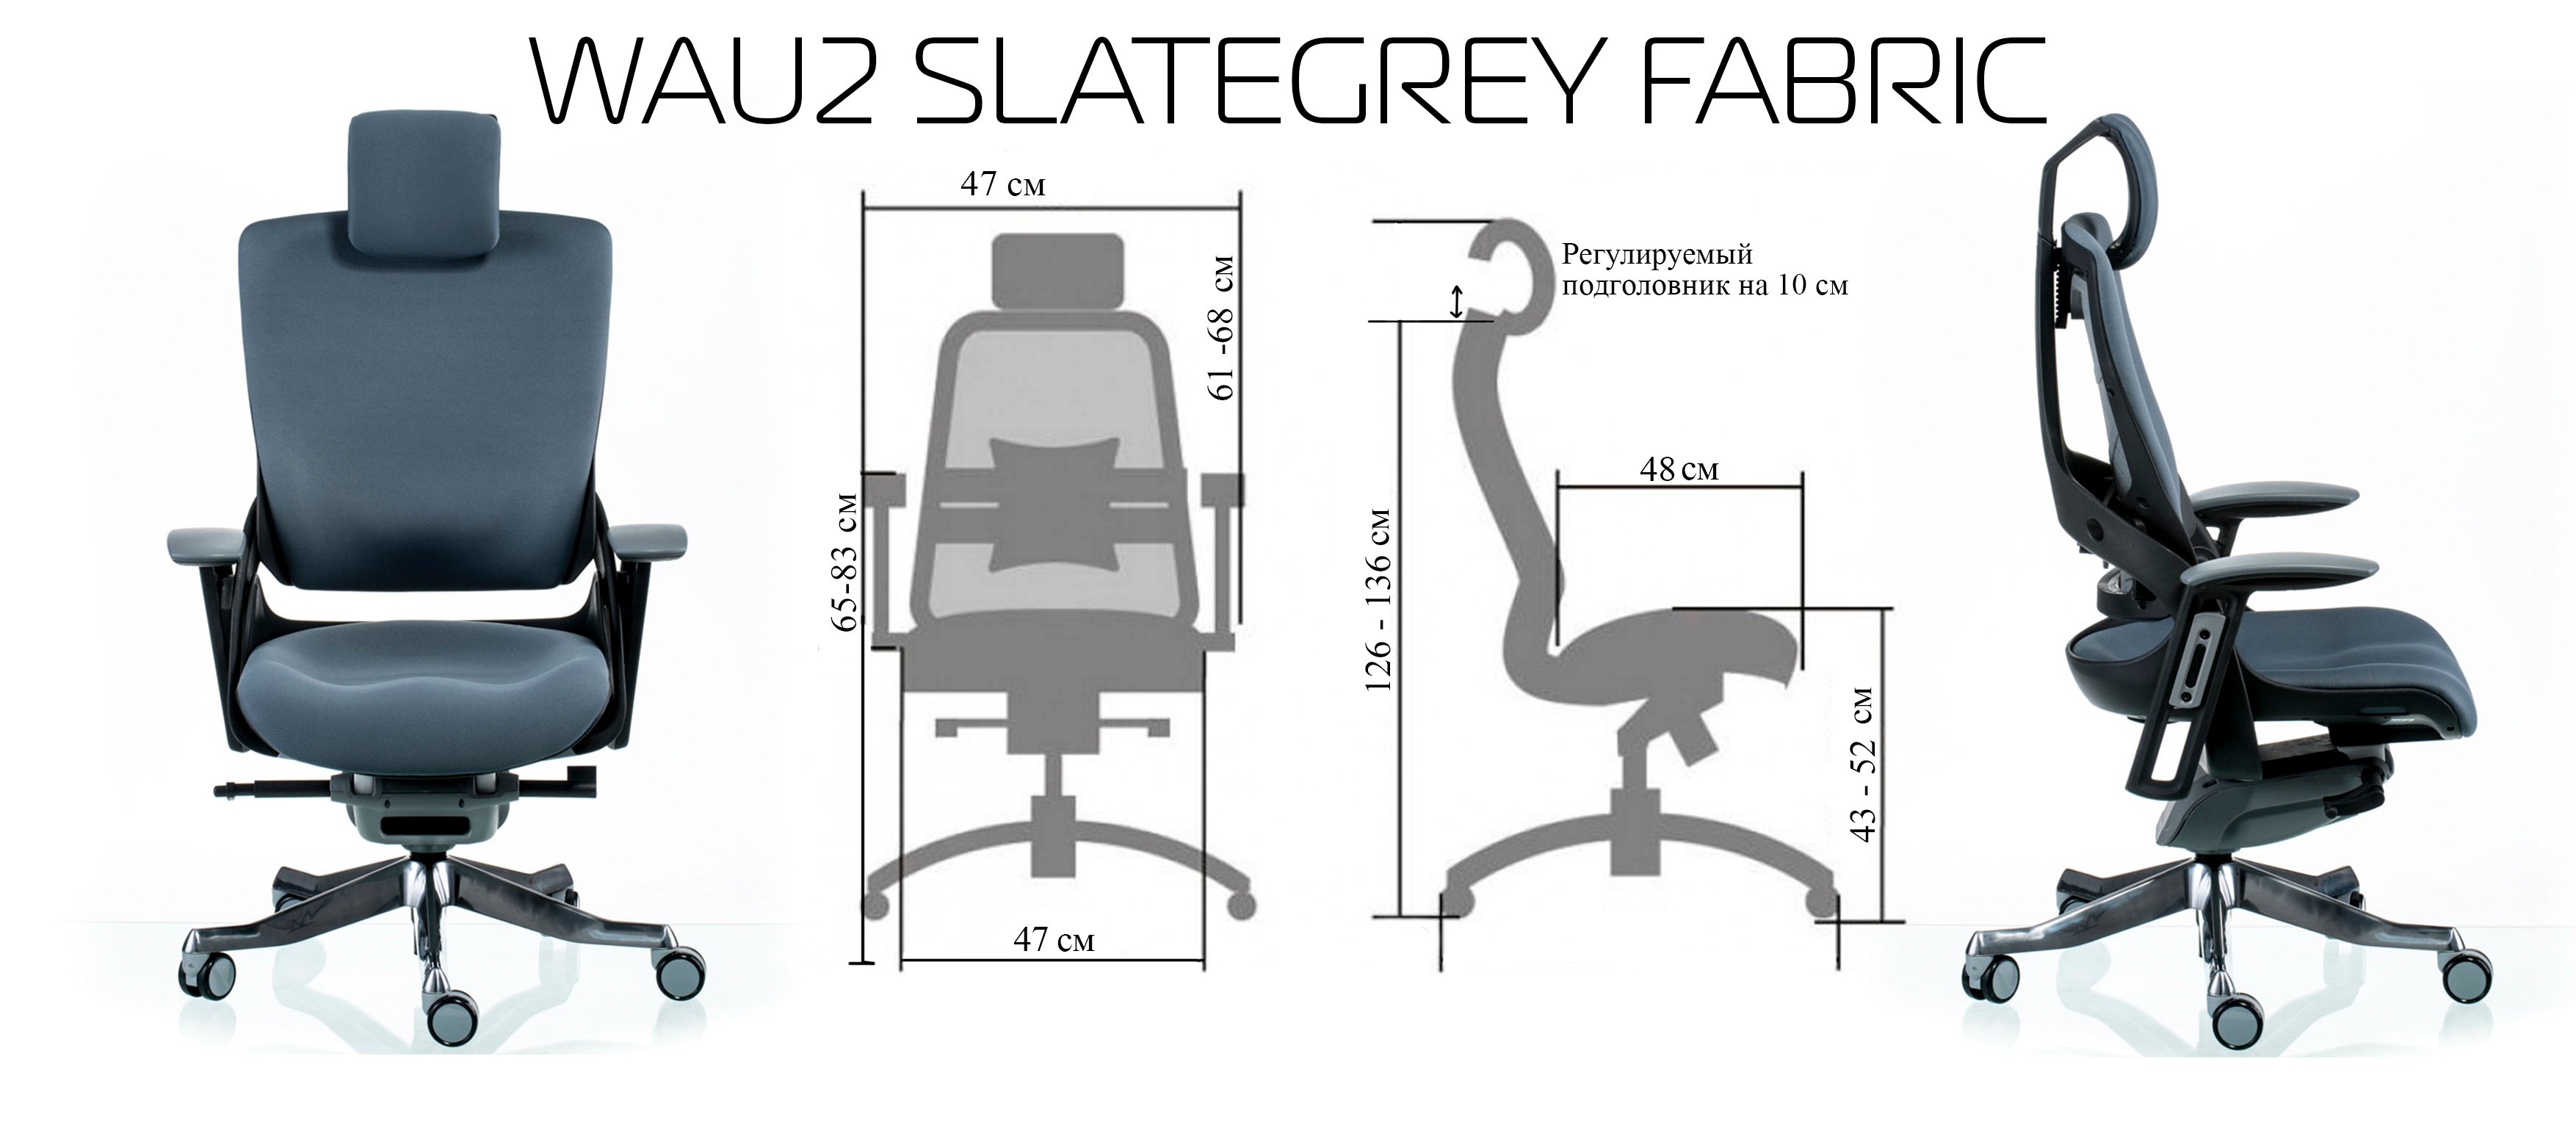 Офисное кресло Special4you Wau2 Slategrey Fabric серое (E5456) - фото 19